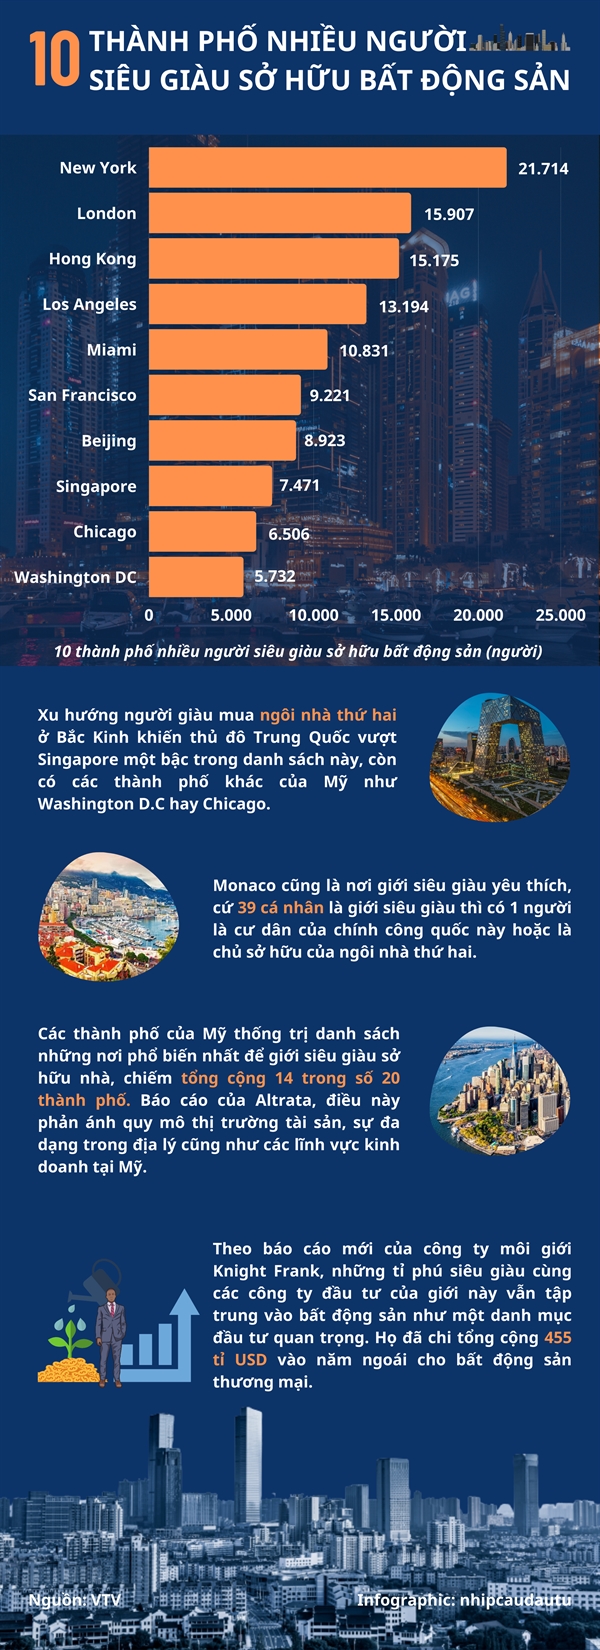 [Infographic] 10 thanh pho nhieu nguoi sieu giau so huu bat dong san nhat